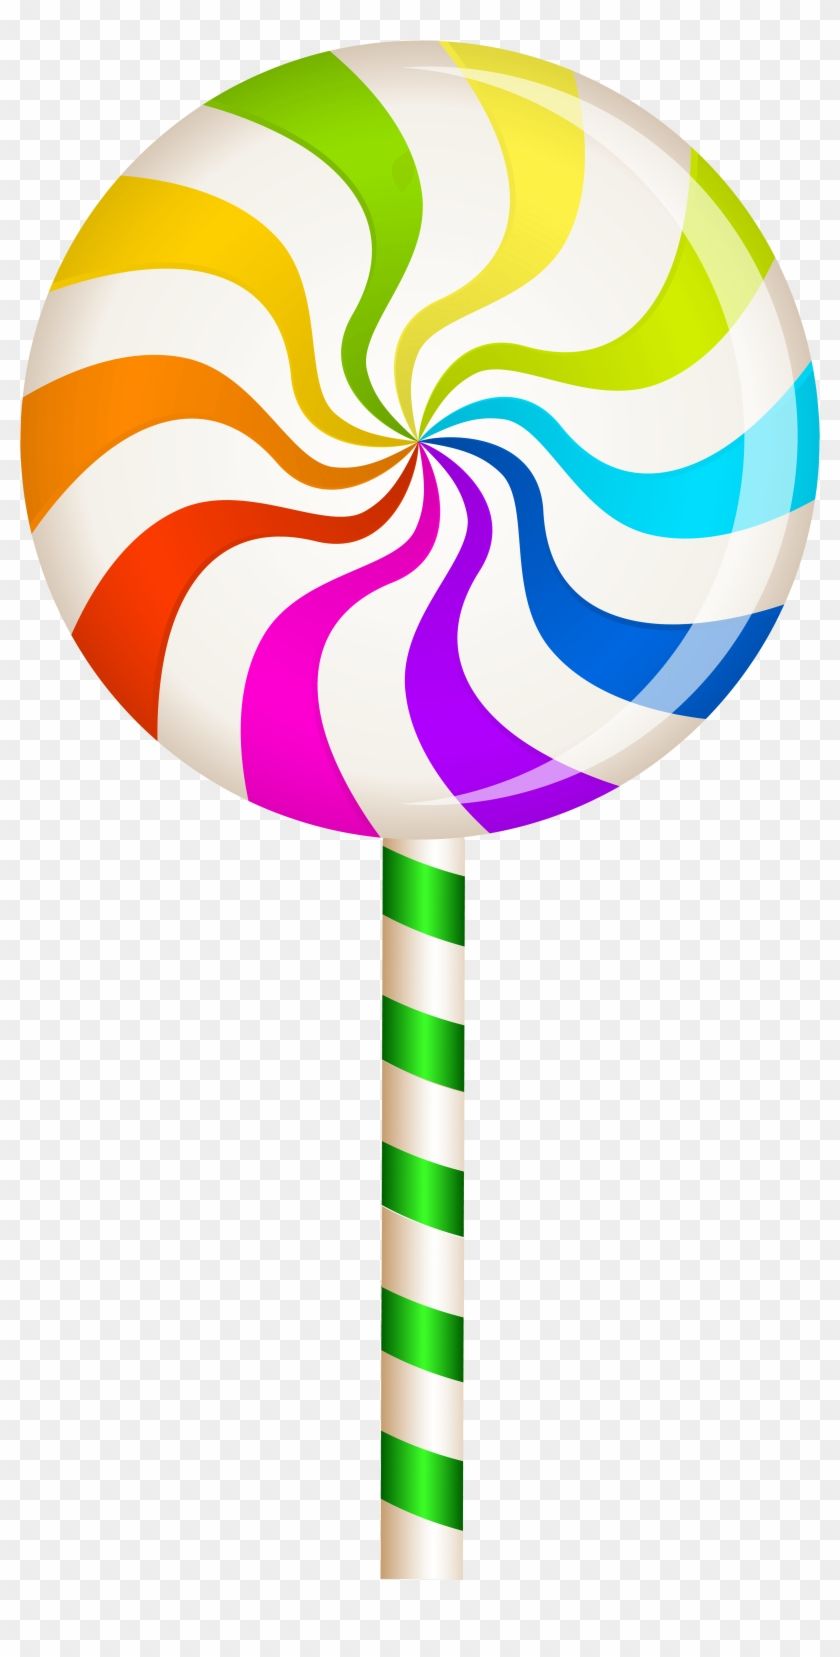 Candyland clipart lollipop. Pin by zeinab mohsen